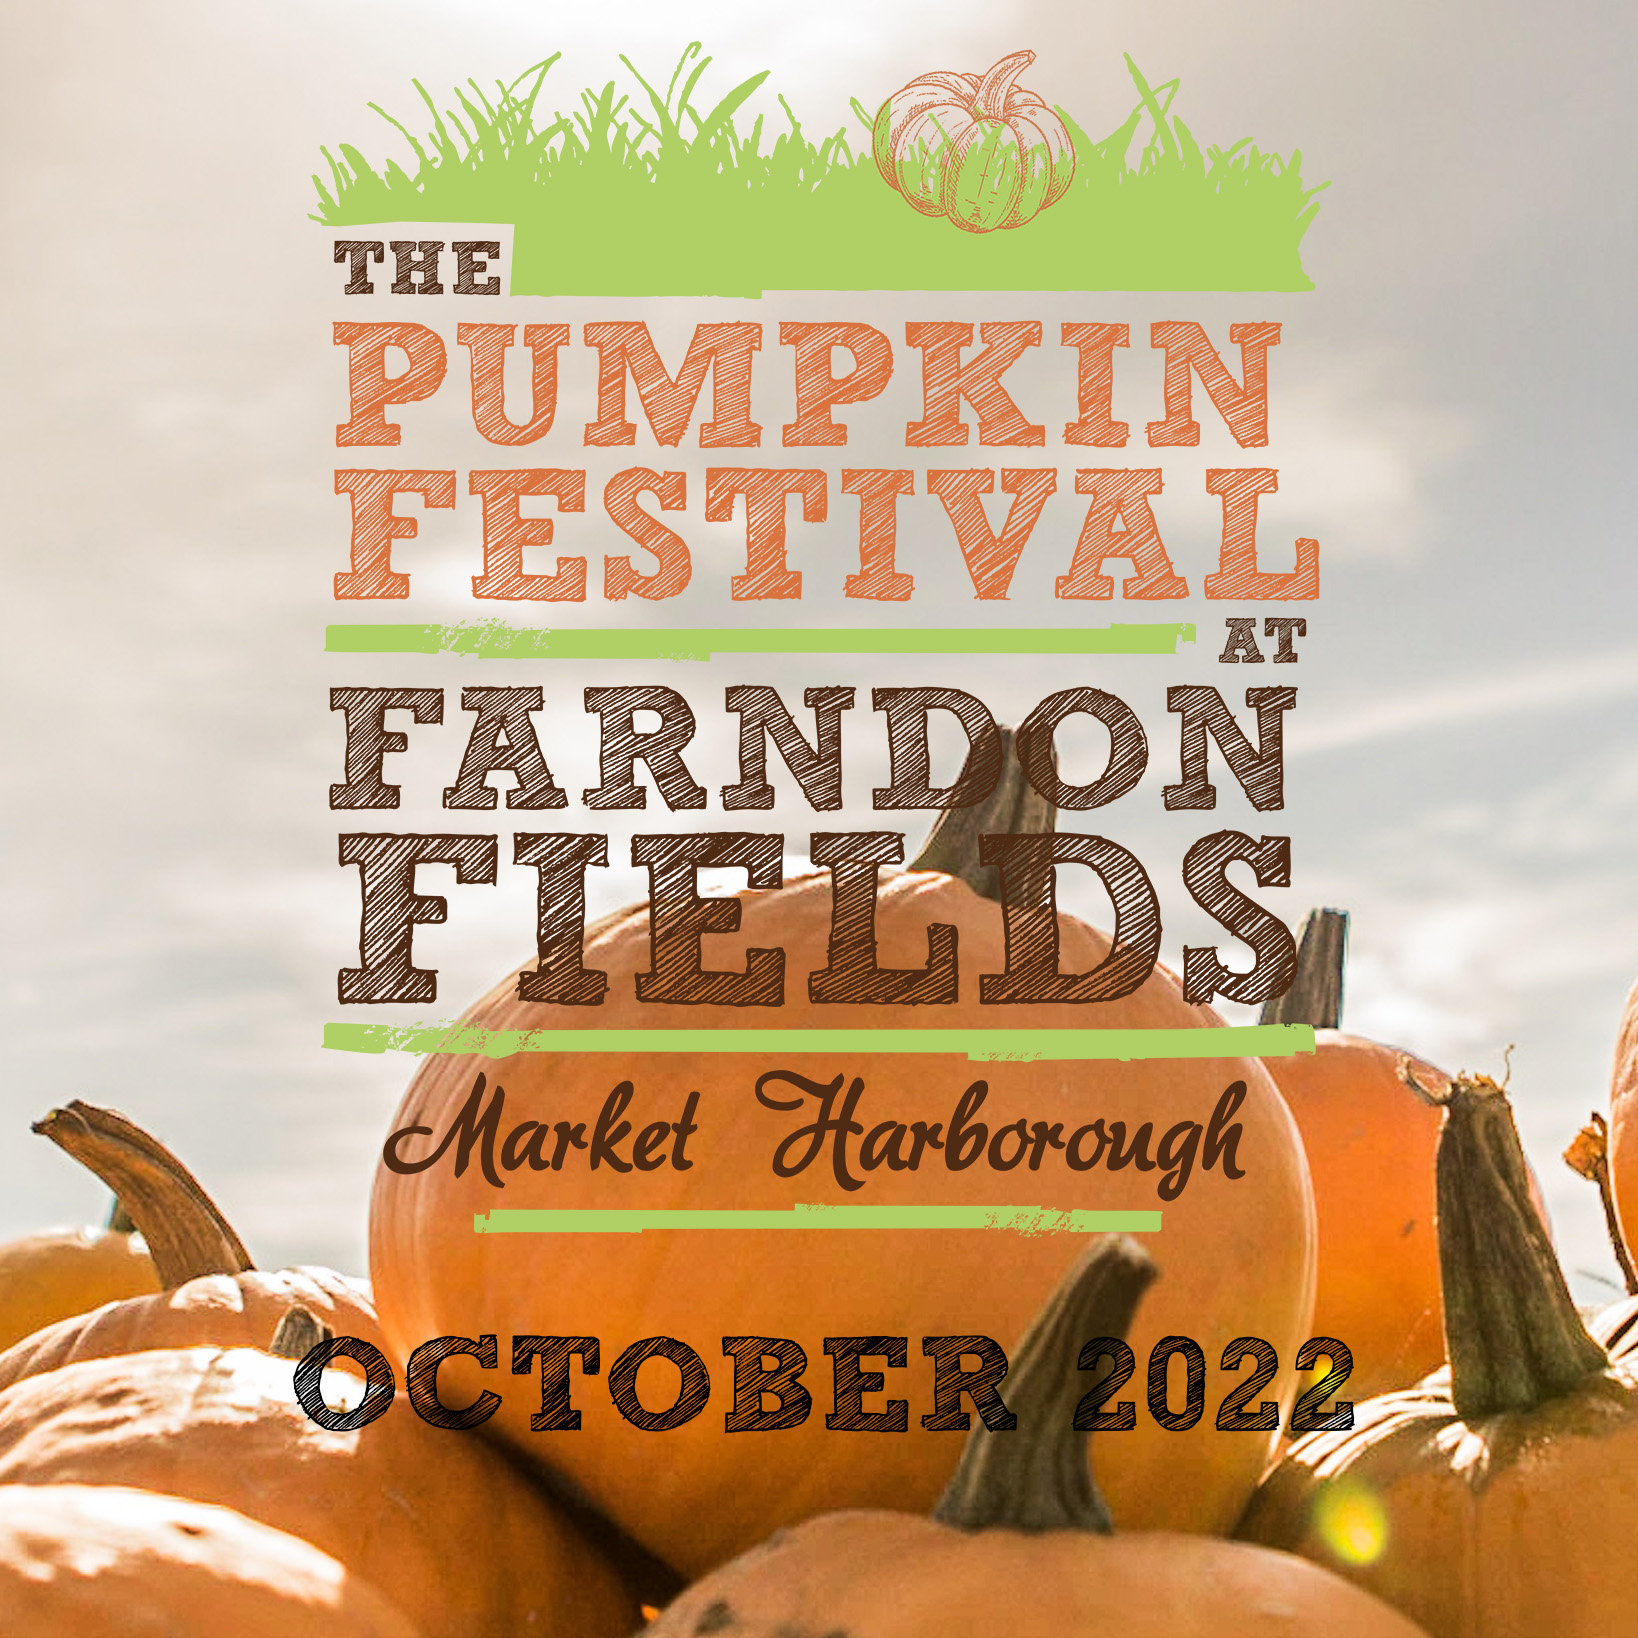 The Pumpkin Festival at Farndon Fields...coming soon!